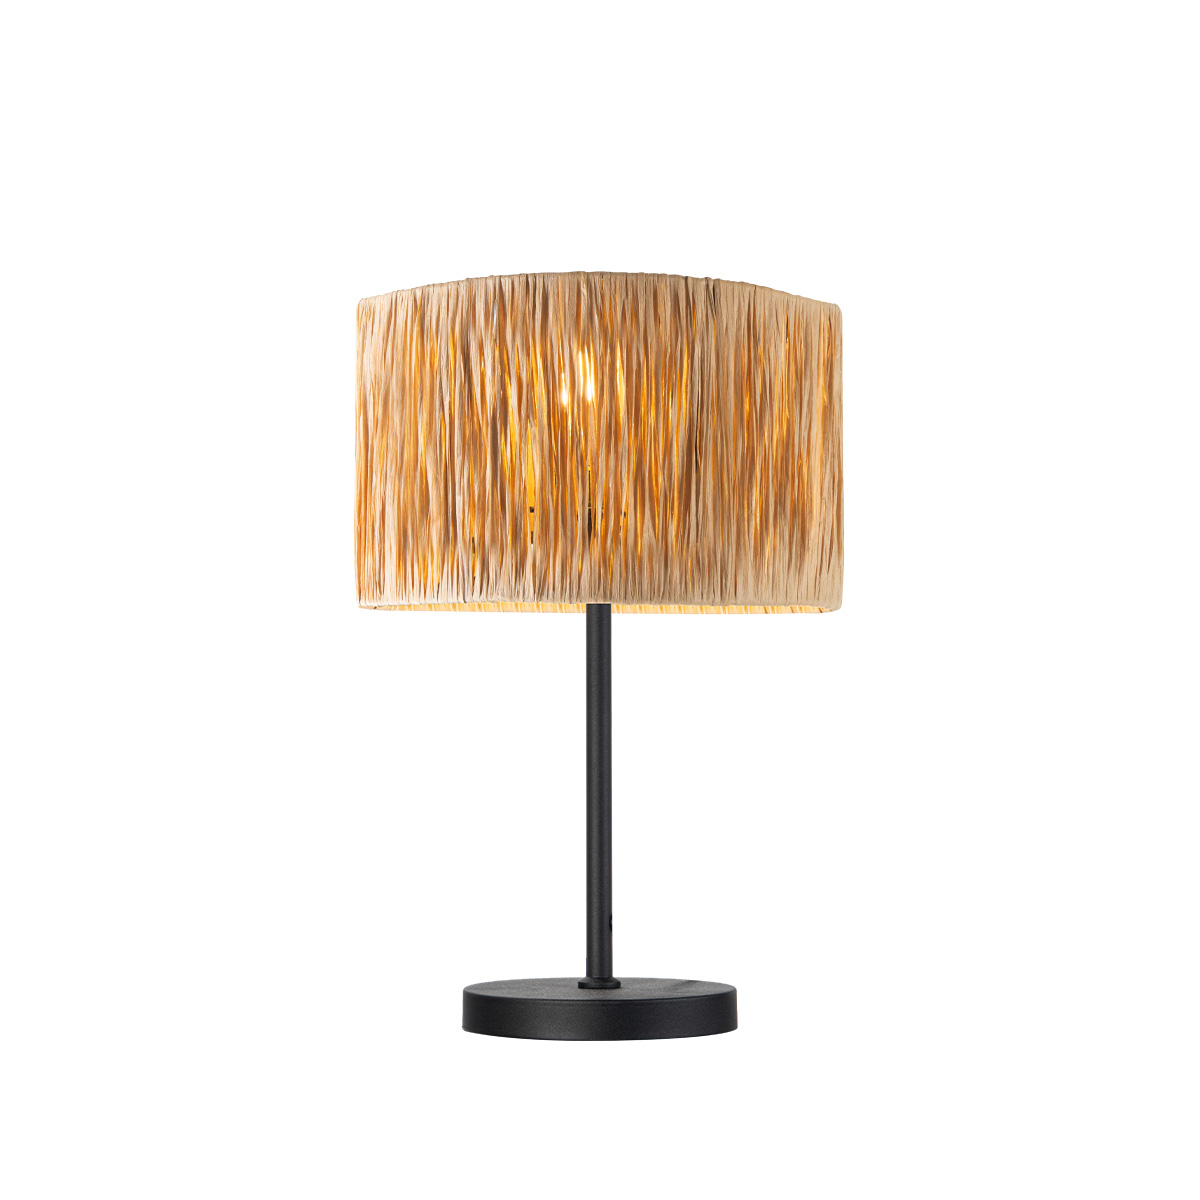 Tangla lighting - TLT7440-01NB - Table lamp 1 Light - sea grass - sand black + natural - medium - E27